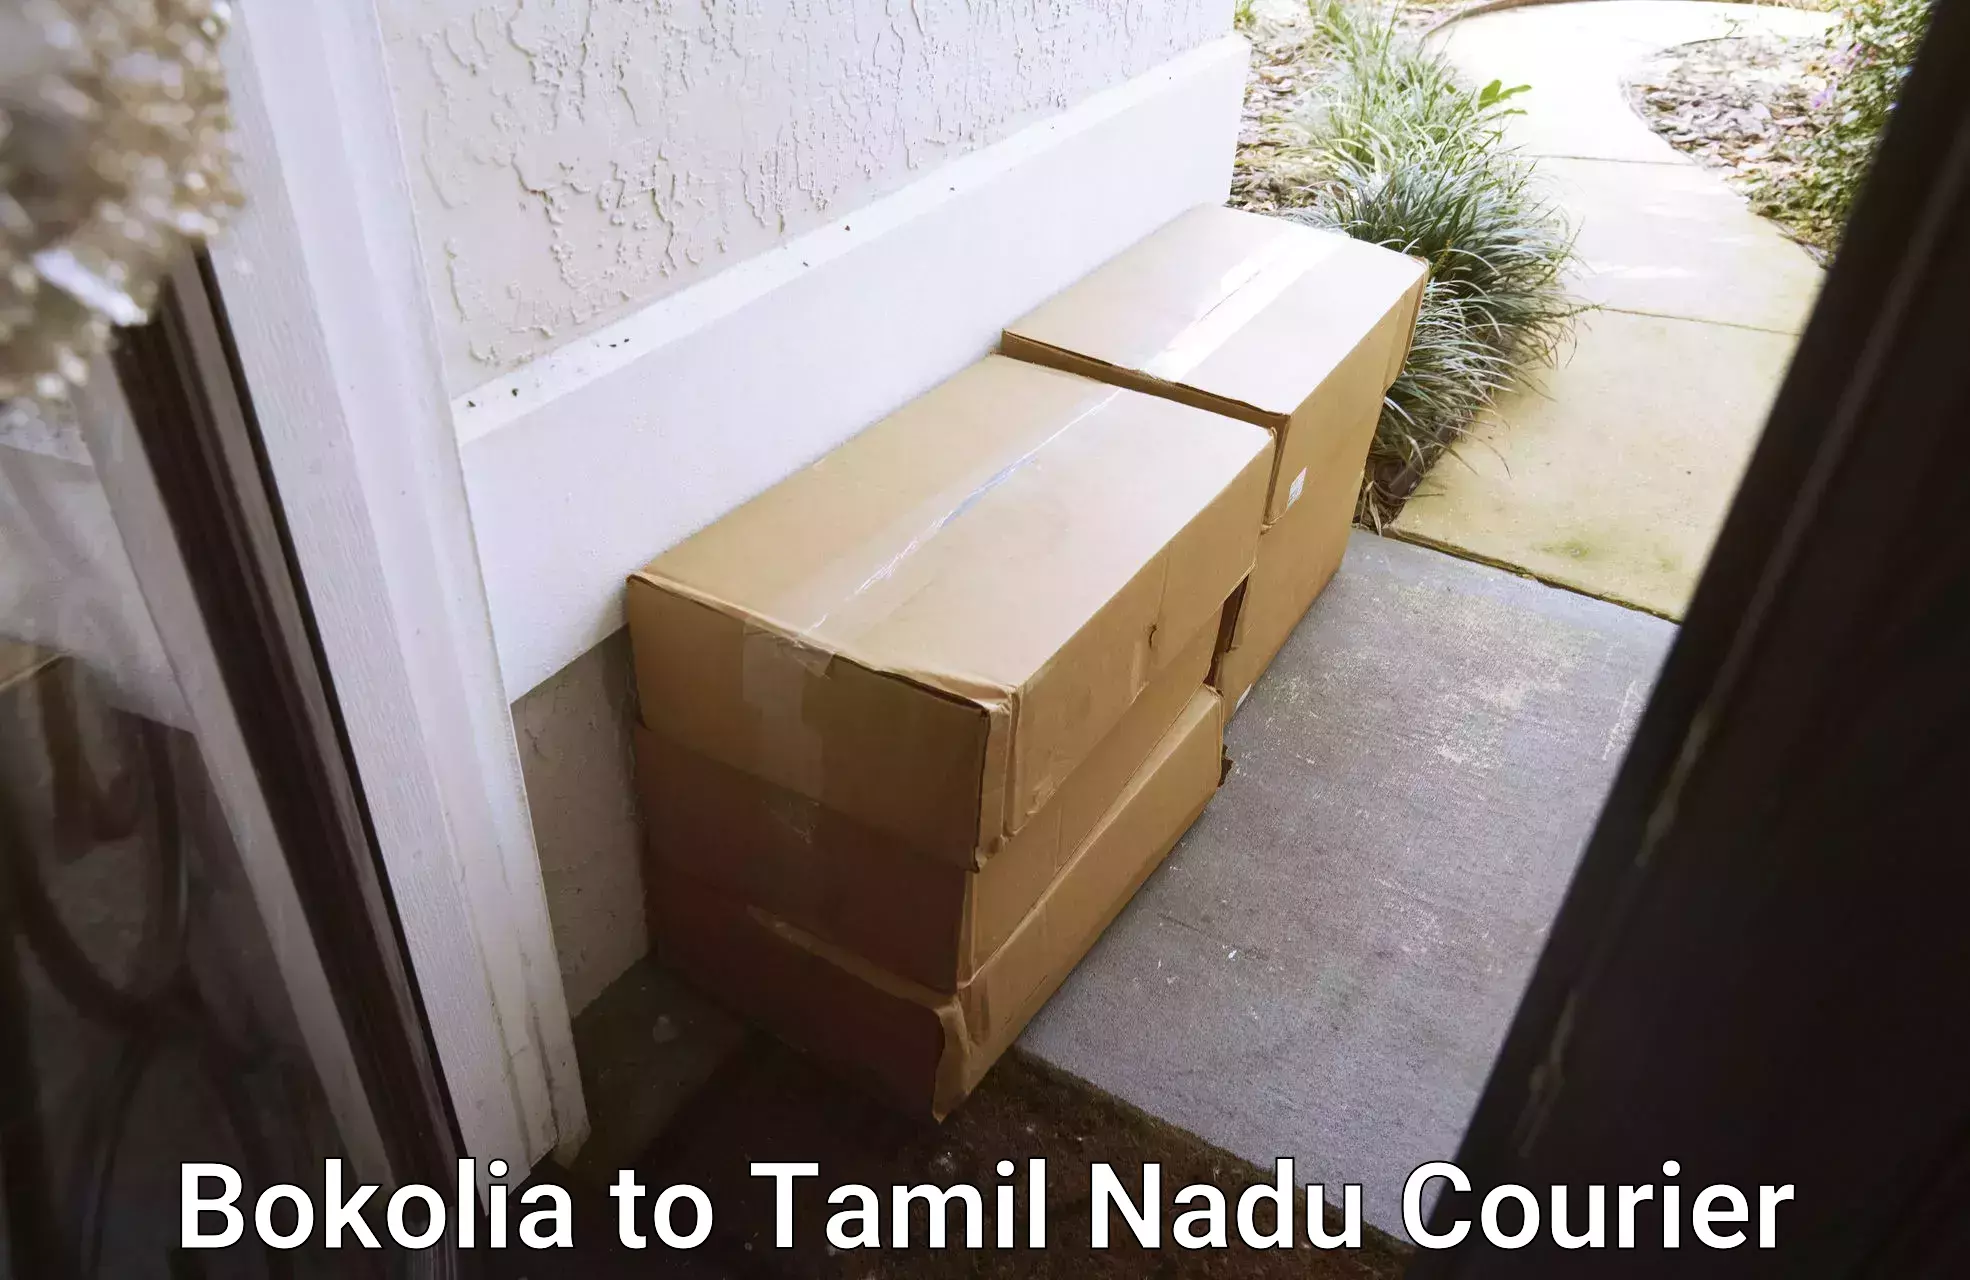 Express delivery capabilities Bokolia to Tamil Nadu